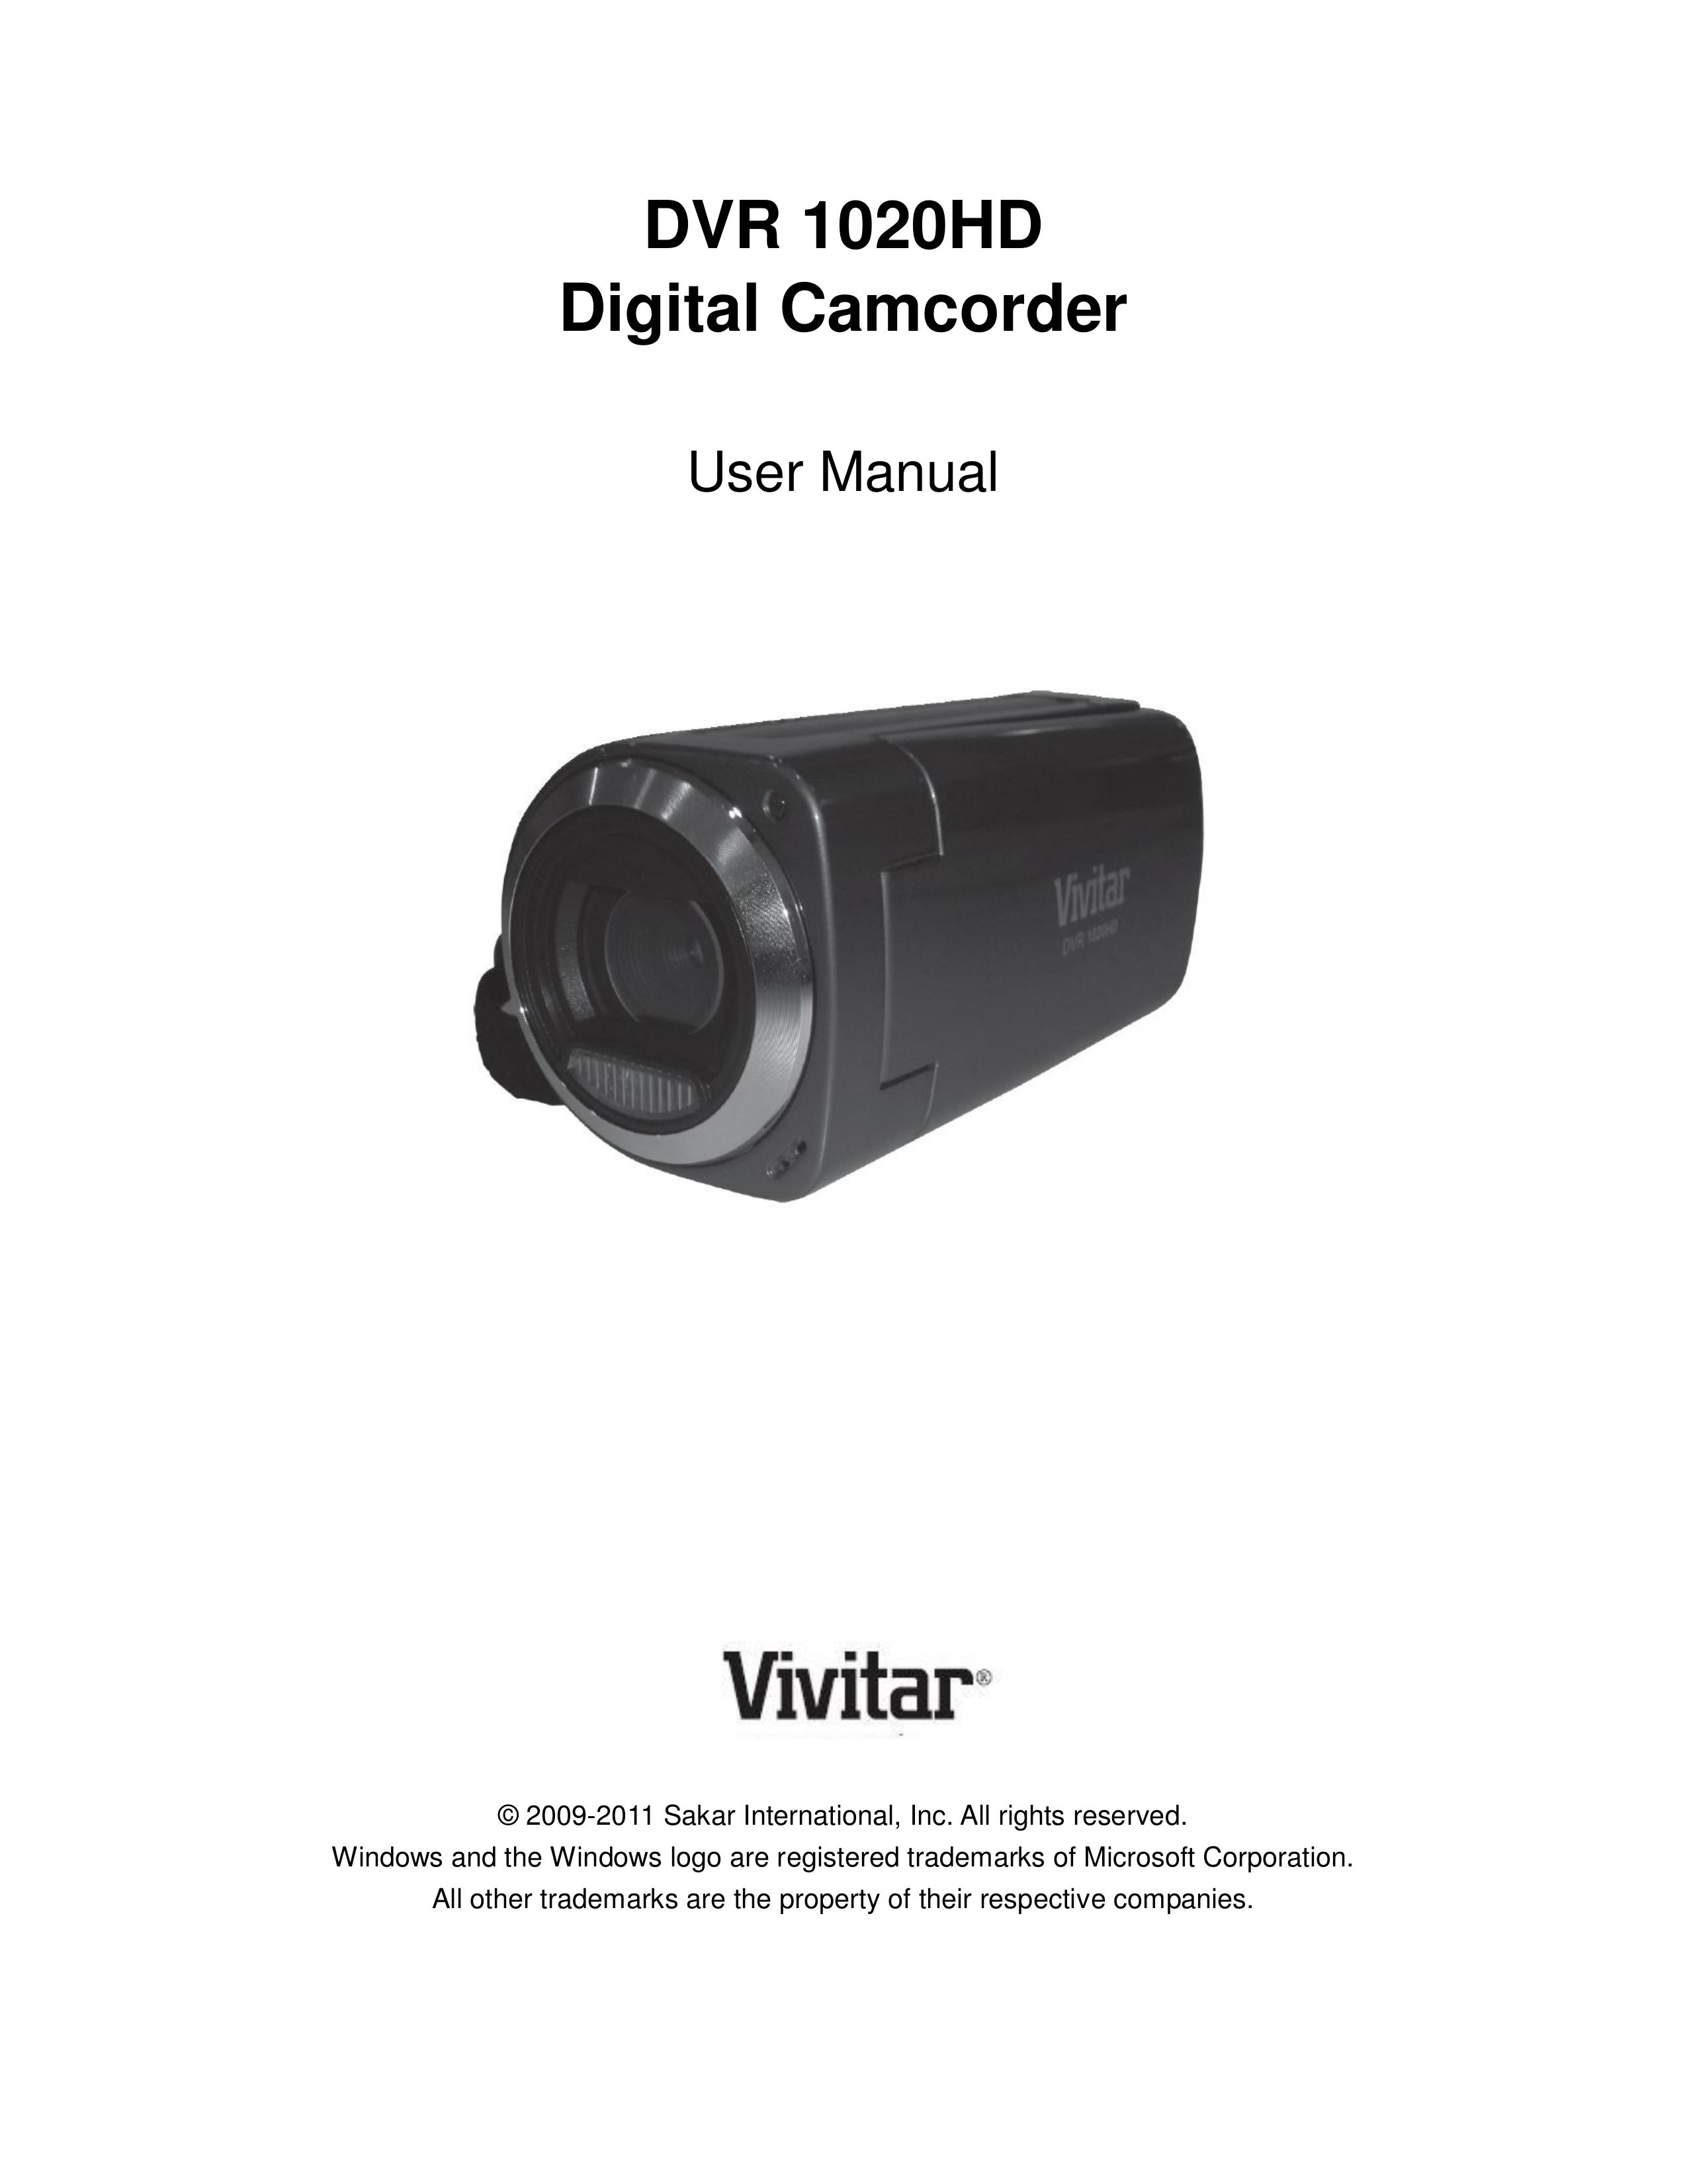 Vivitar DVR 1020HD Camcorder User Manual